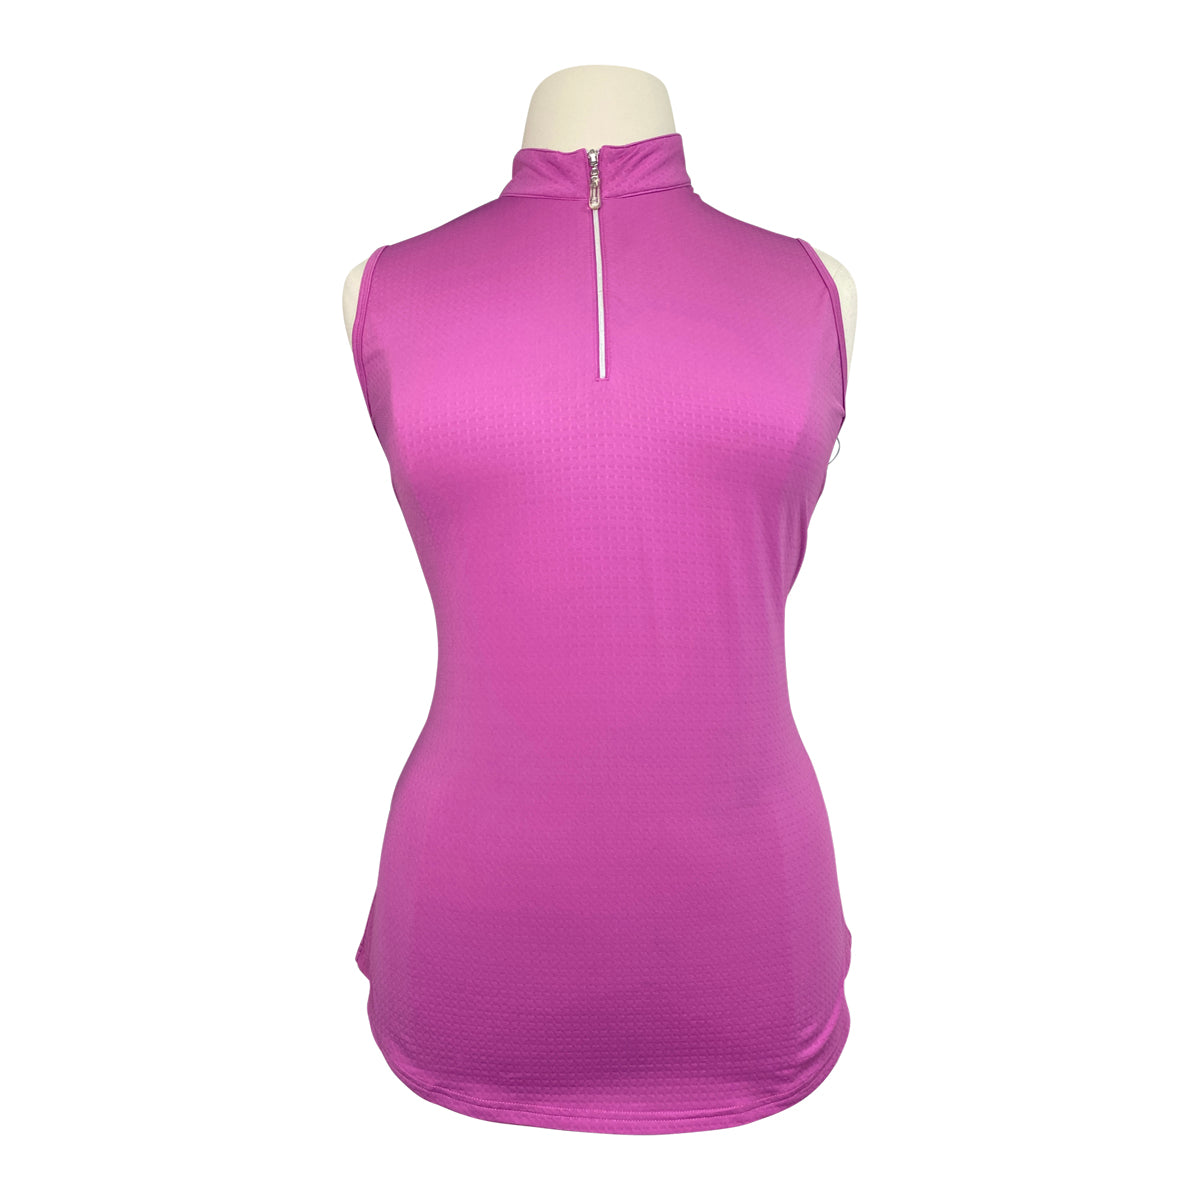 Sun Shield Sleeveless Shirt by SmartPak in Pink